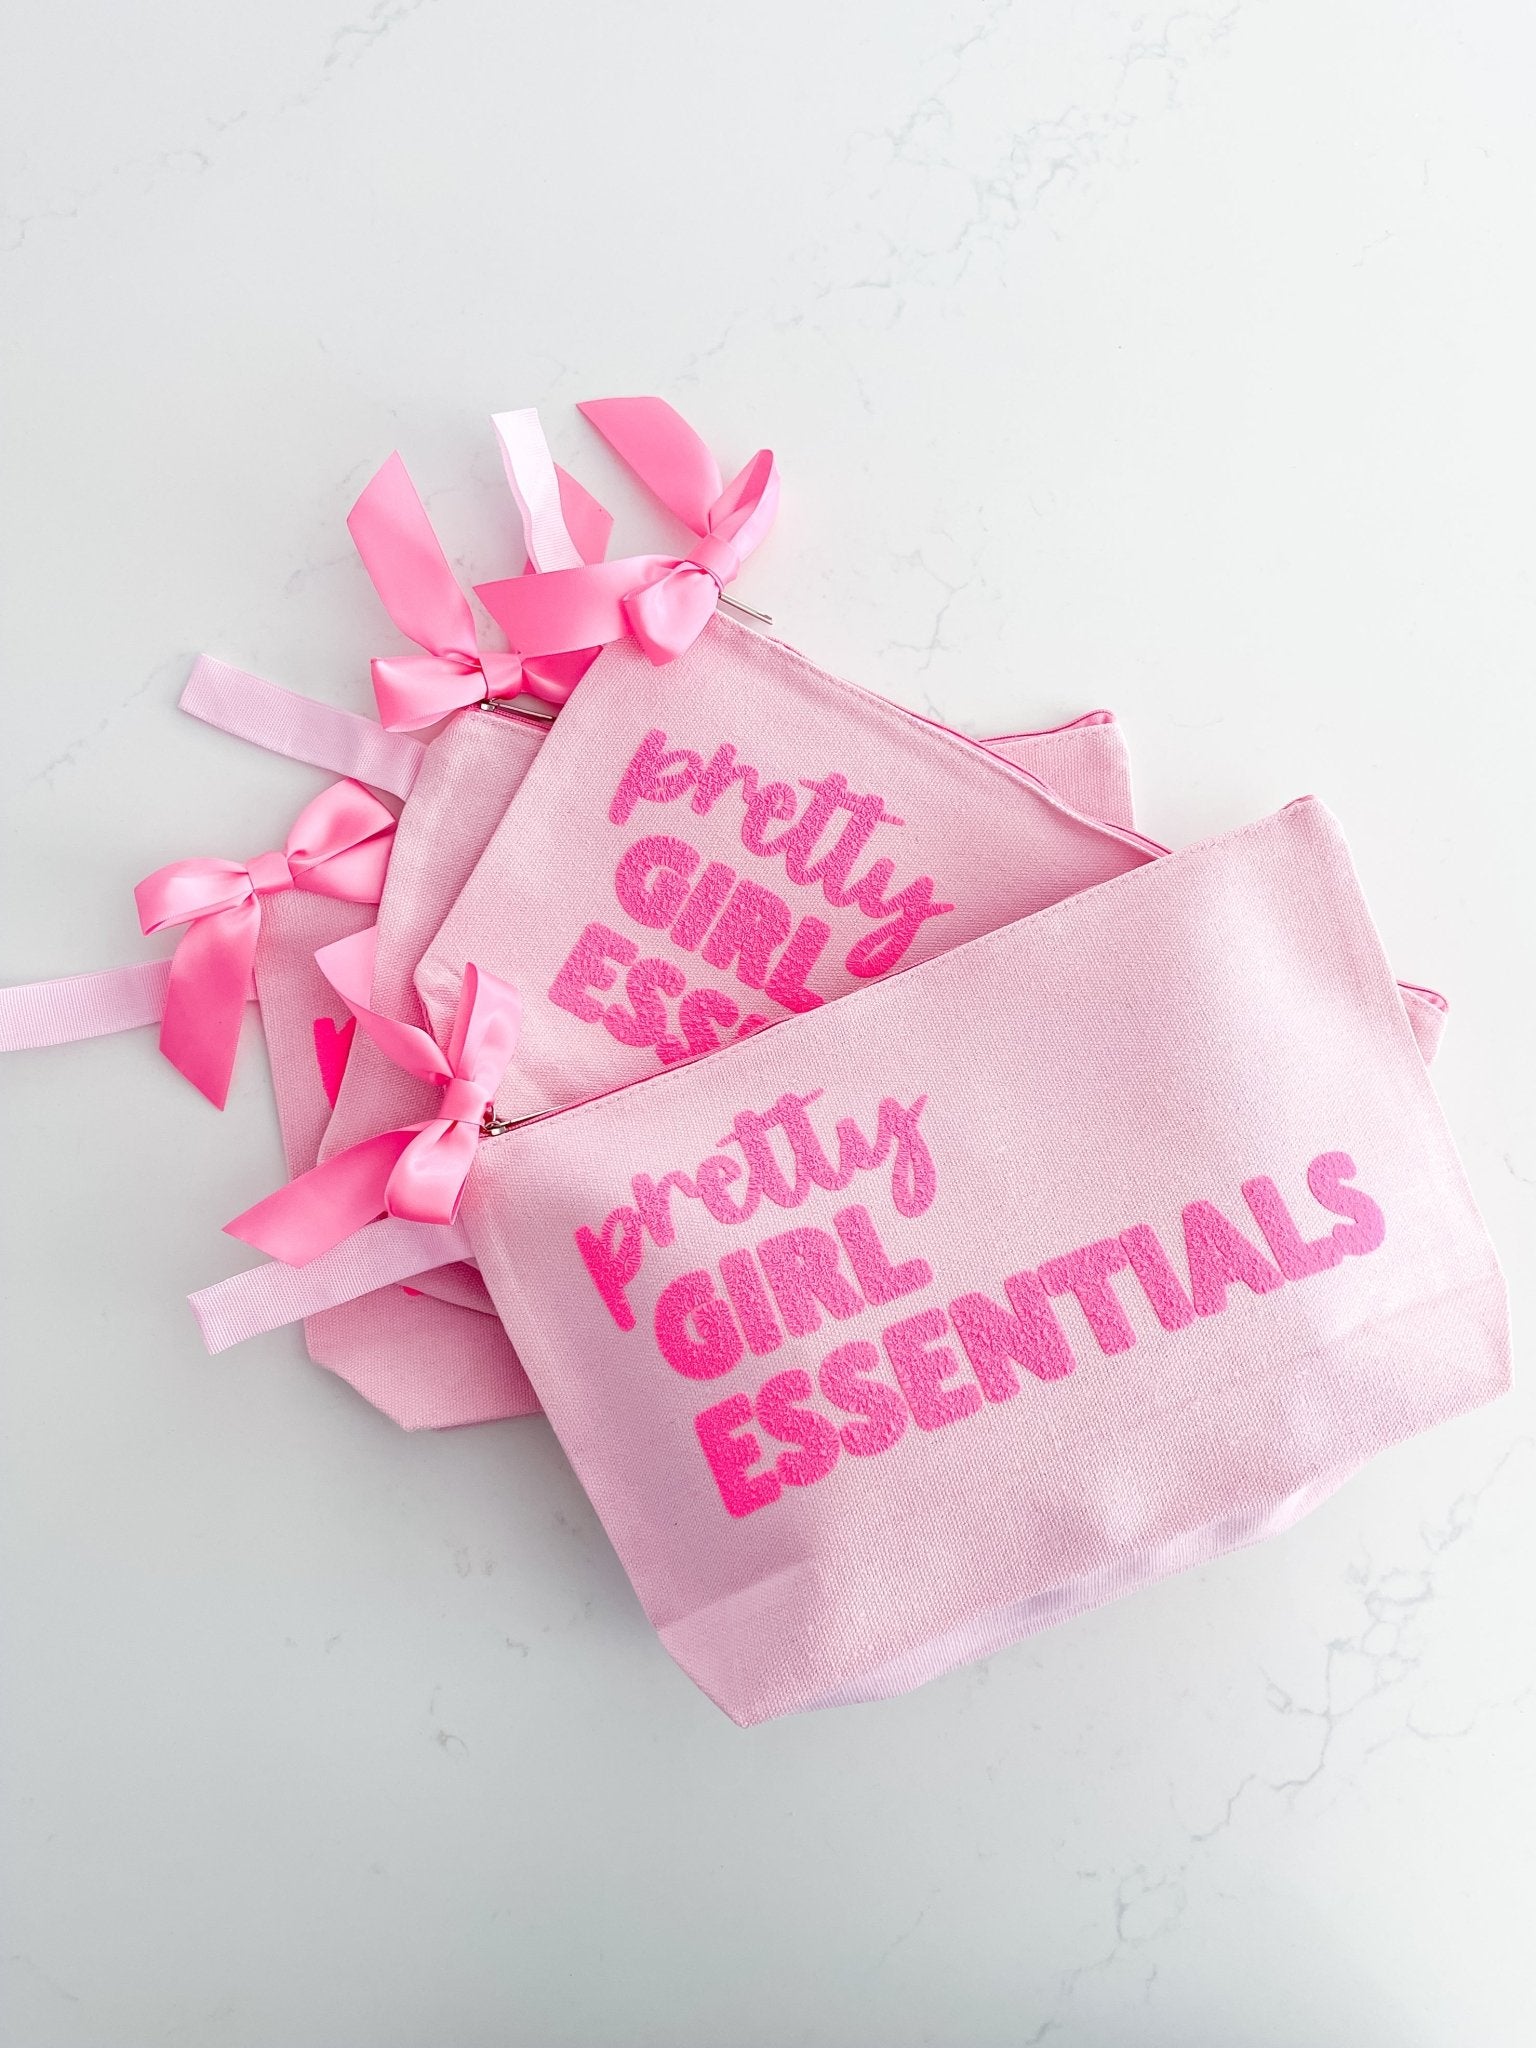 Pretty Girl Essentials Bag - Designs by Lauren Ann